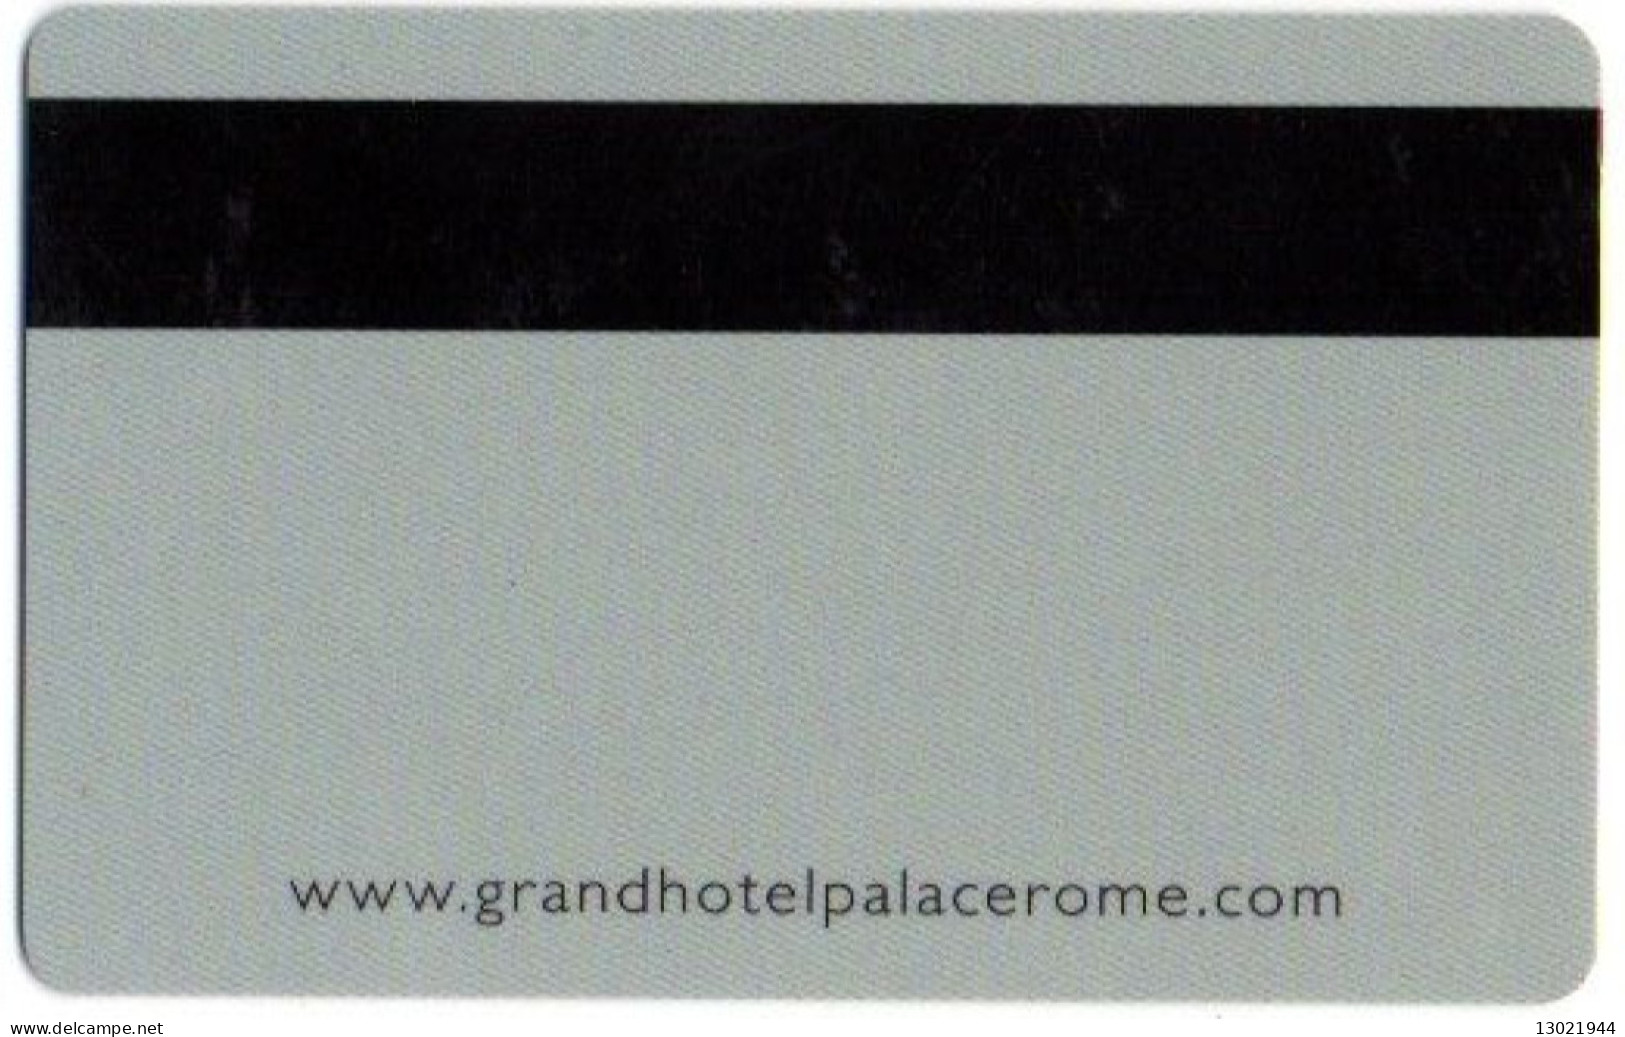 ITALIA  KEY HOTEL   Grand Hotel Palace Rome - Hotelsleutels (kaarten)